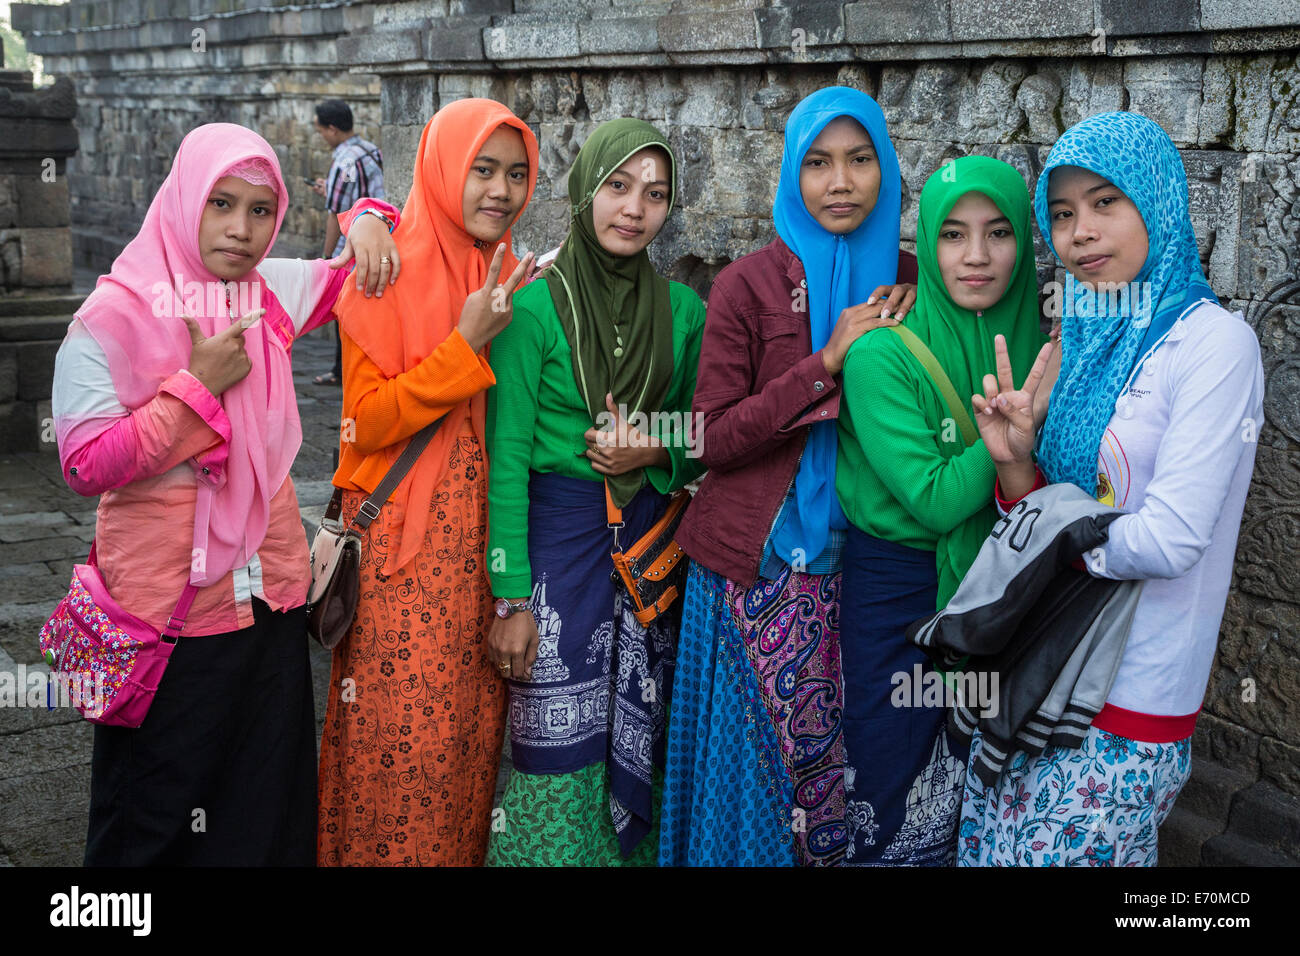 Indonesian Dresses